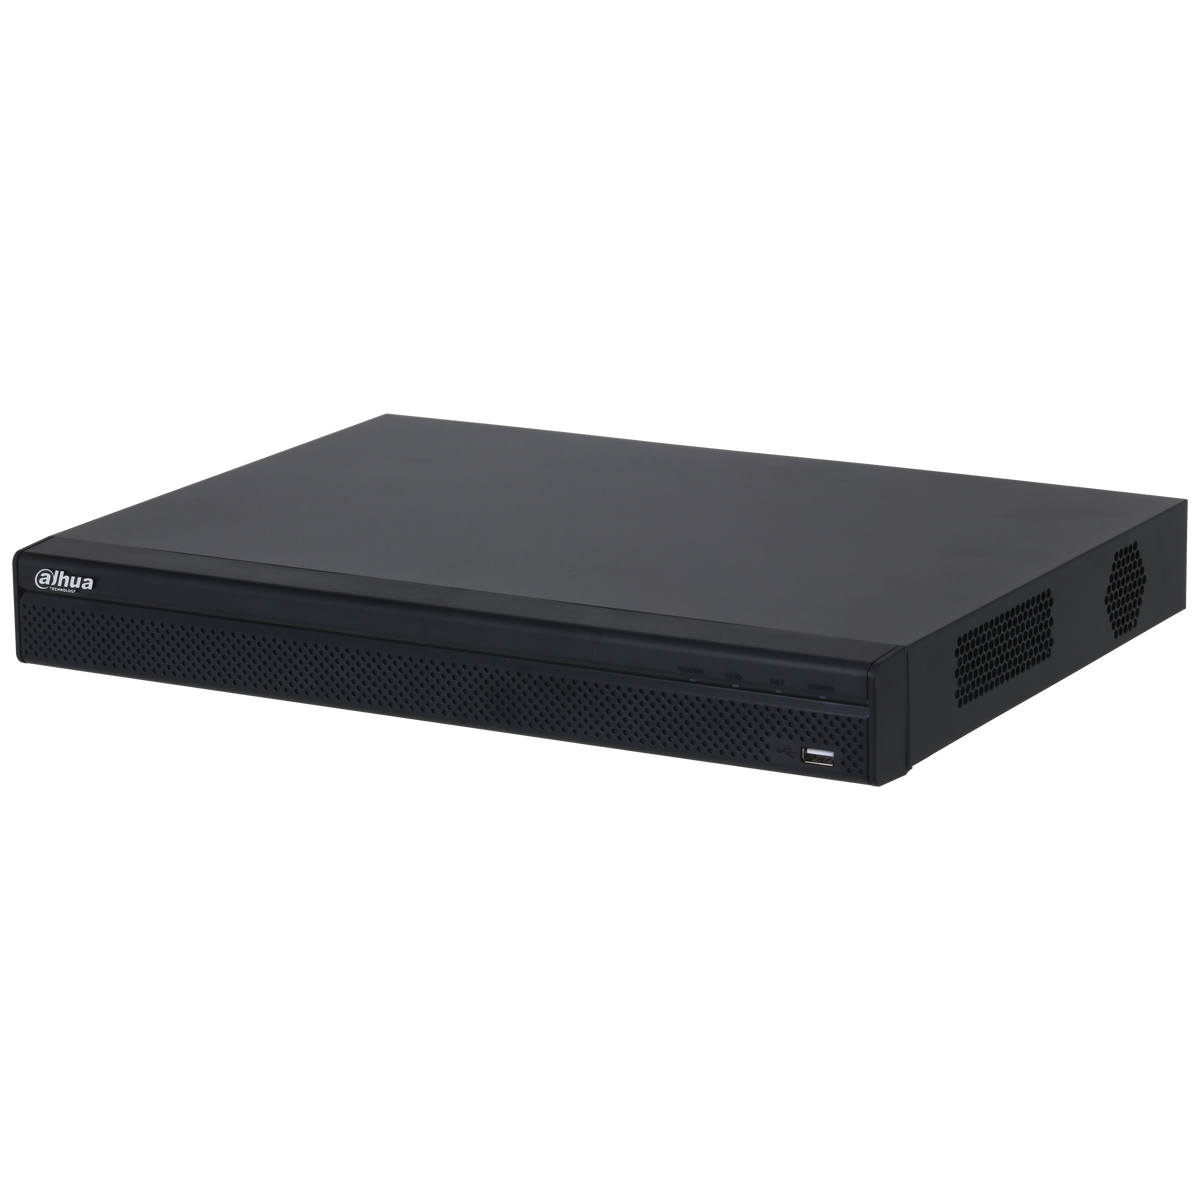 DAHUA NVR4208-4KS3 8CH 1U 2HDDs Lite Network Video Recorder